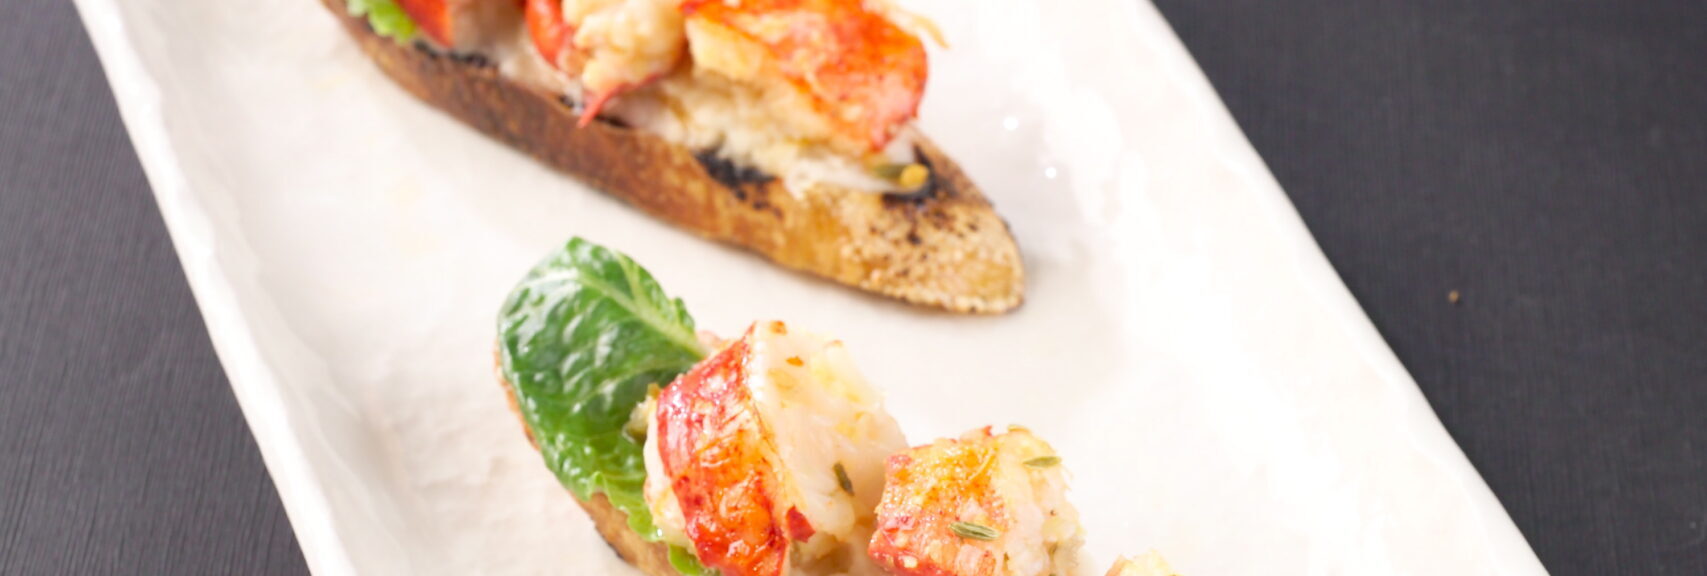 Roasted Maine Lobster on Garlic and White Bean Bruschetta recipe image